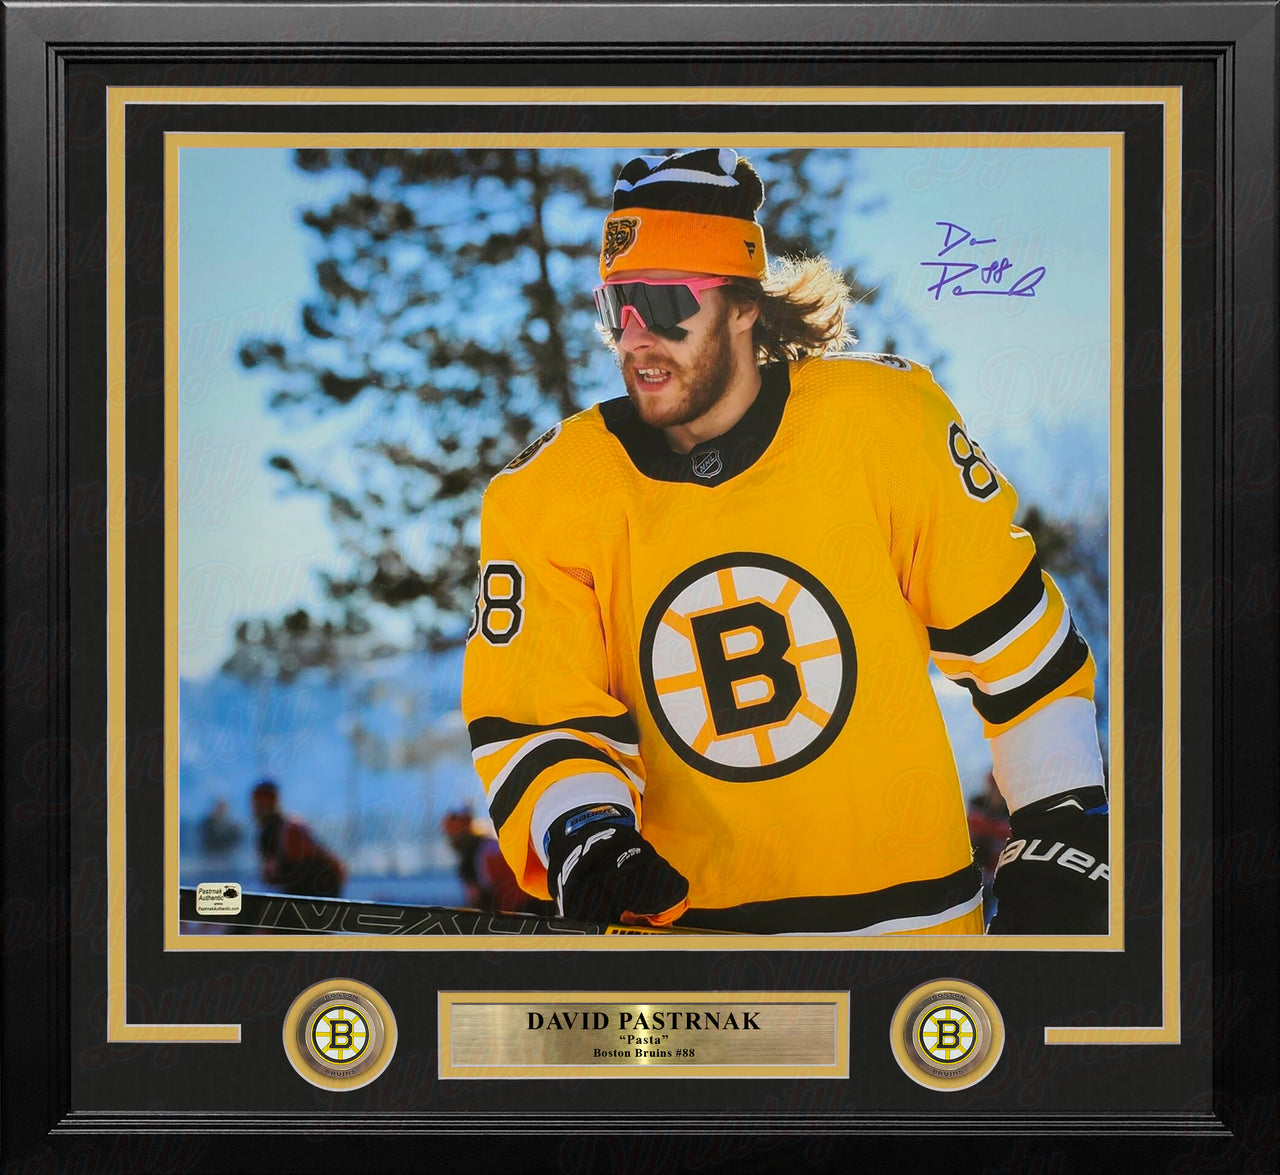 David Pastrnak Lake Tahoe Sunglasses Autographed Boston Bruins 16" x 20" Framed Hockey Photo